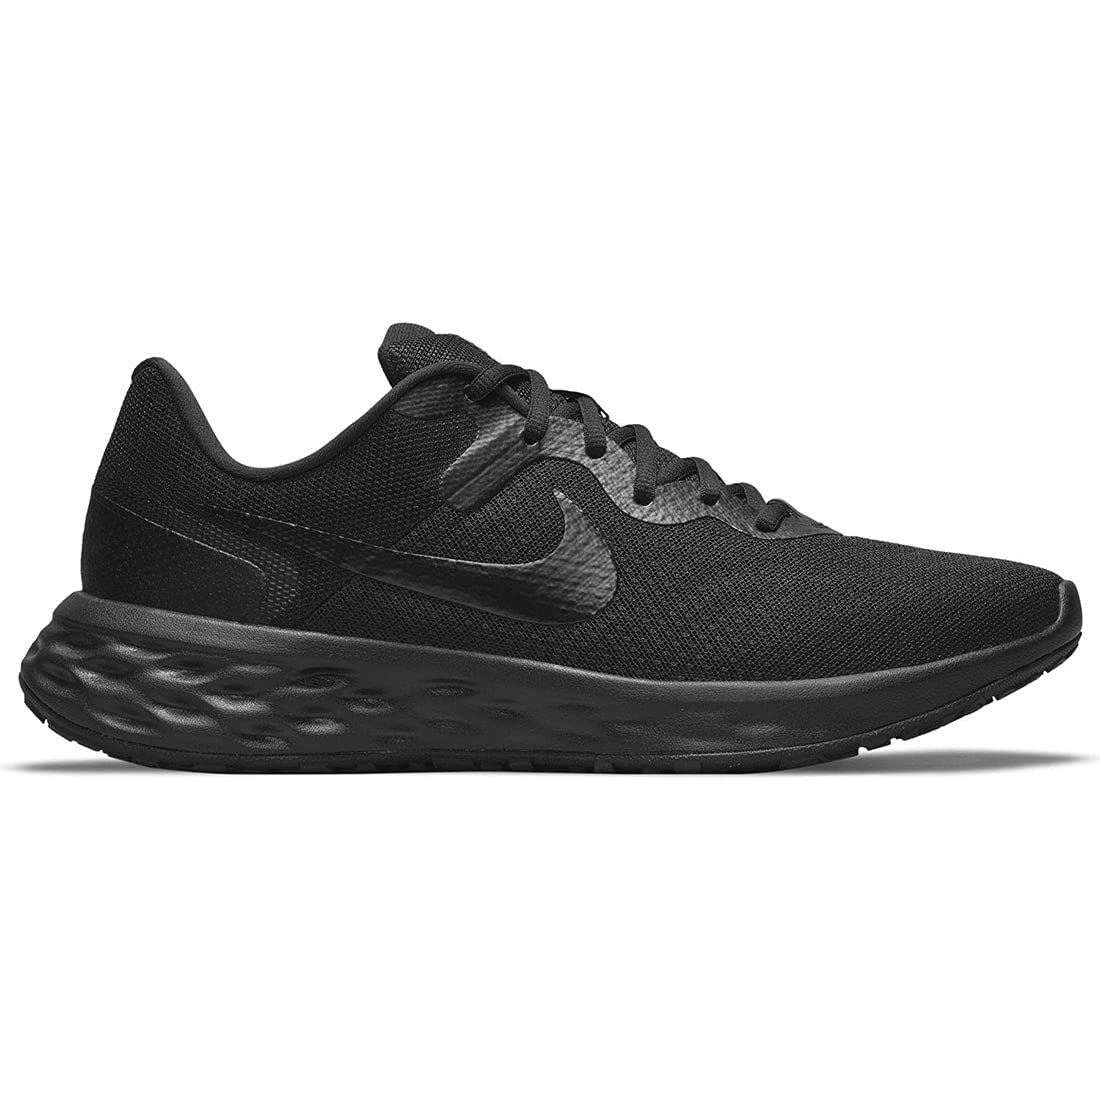 NIKE REVOLUTION 6 NN Men's Sneakers [Lightweight] DC3728 003 Black/White/Iron Grey